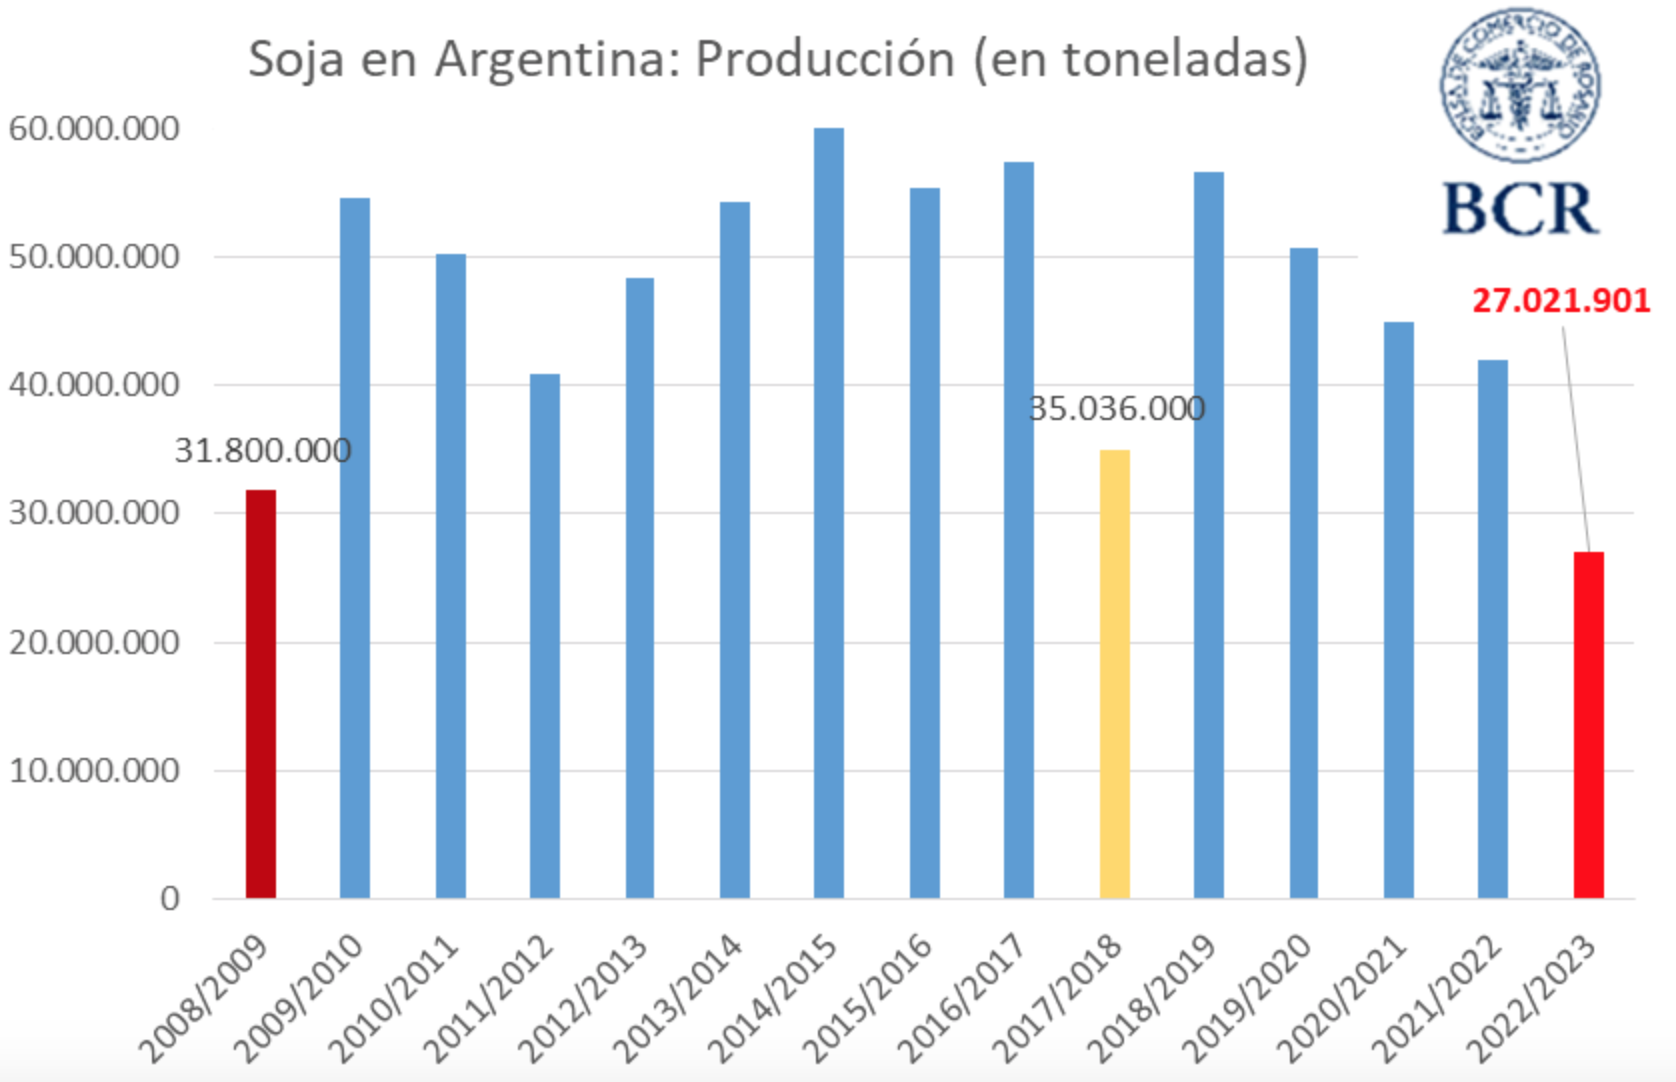 Lowest crop ever in Argentina 🇦🇷